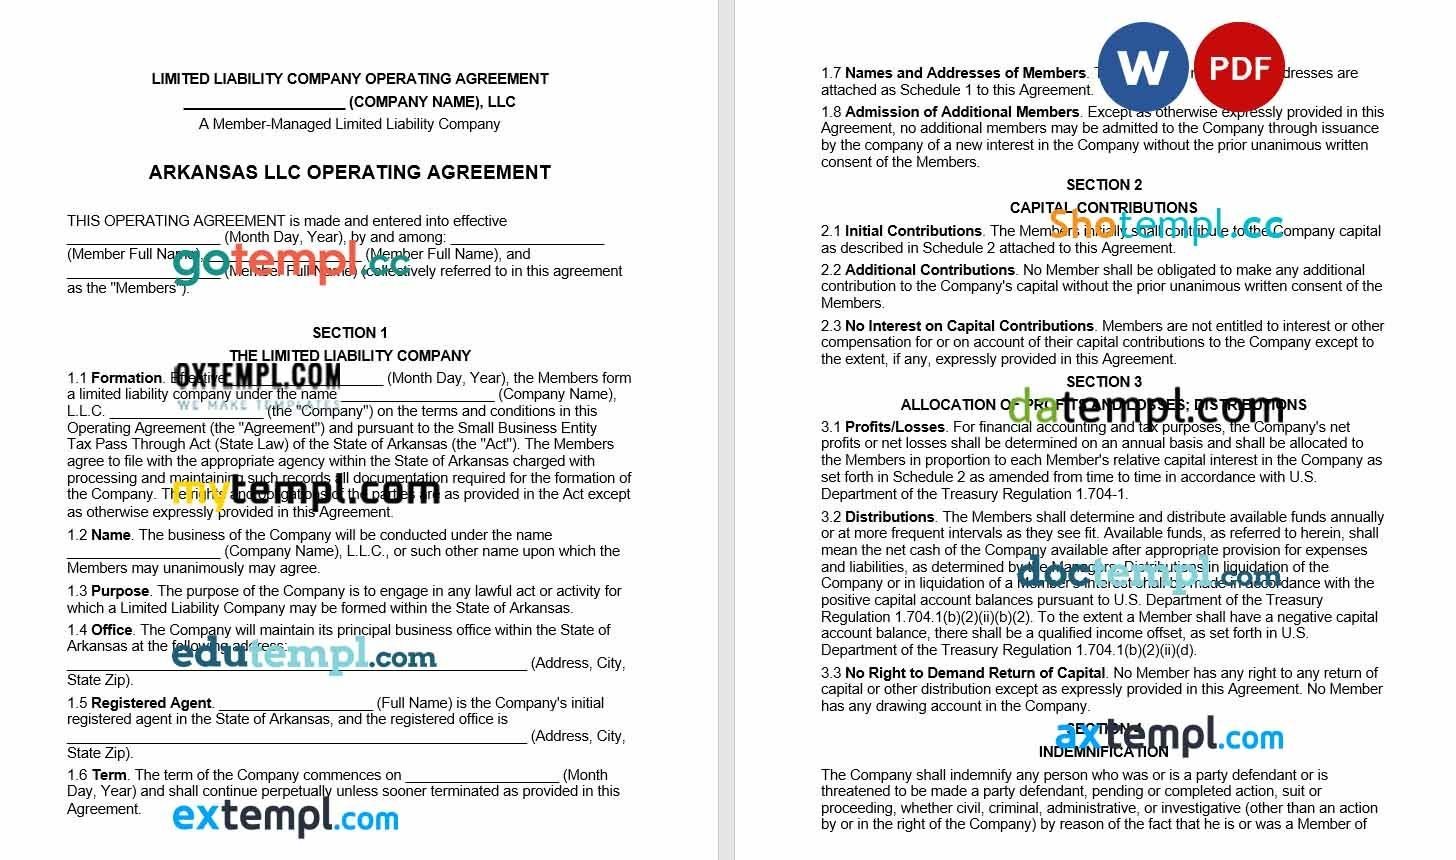 Arkansas Multi-Member LLC Operating Agreement Word example, fully editable